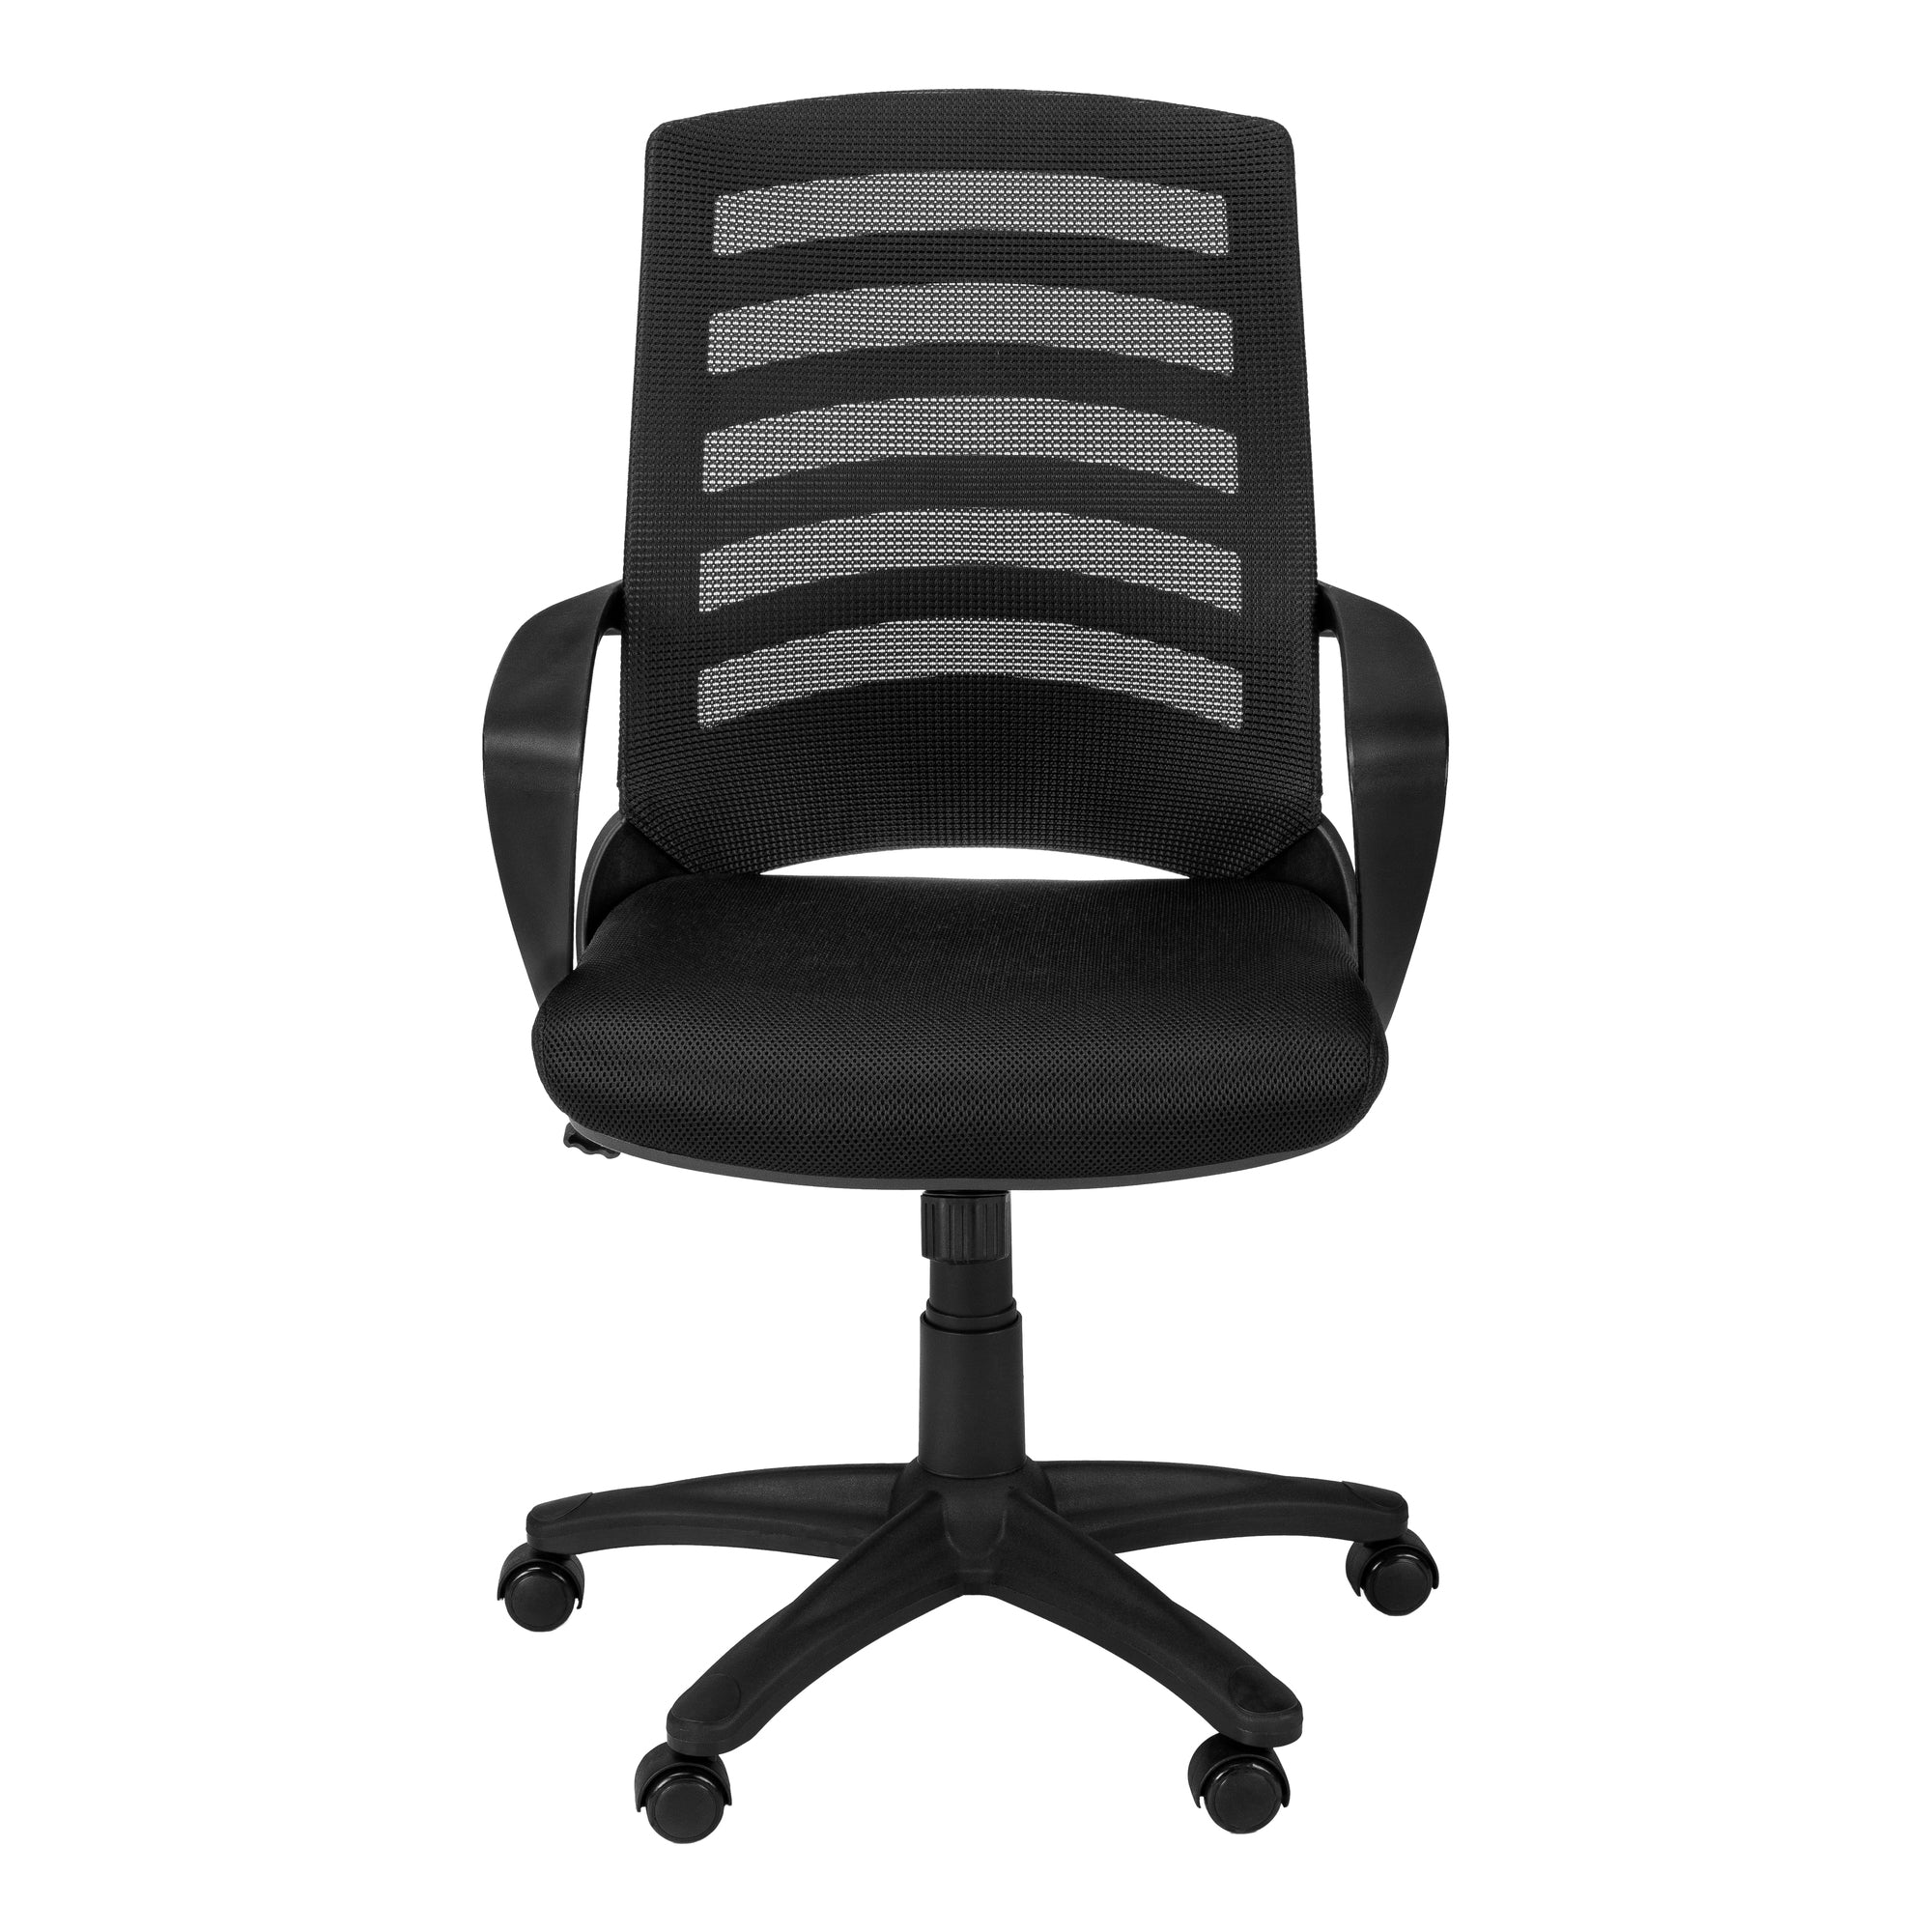 Office Chair - Black / Black Mesh / Multi Position